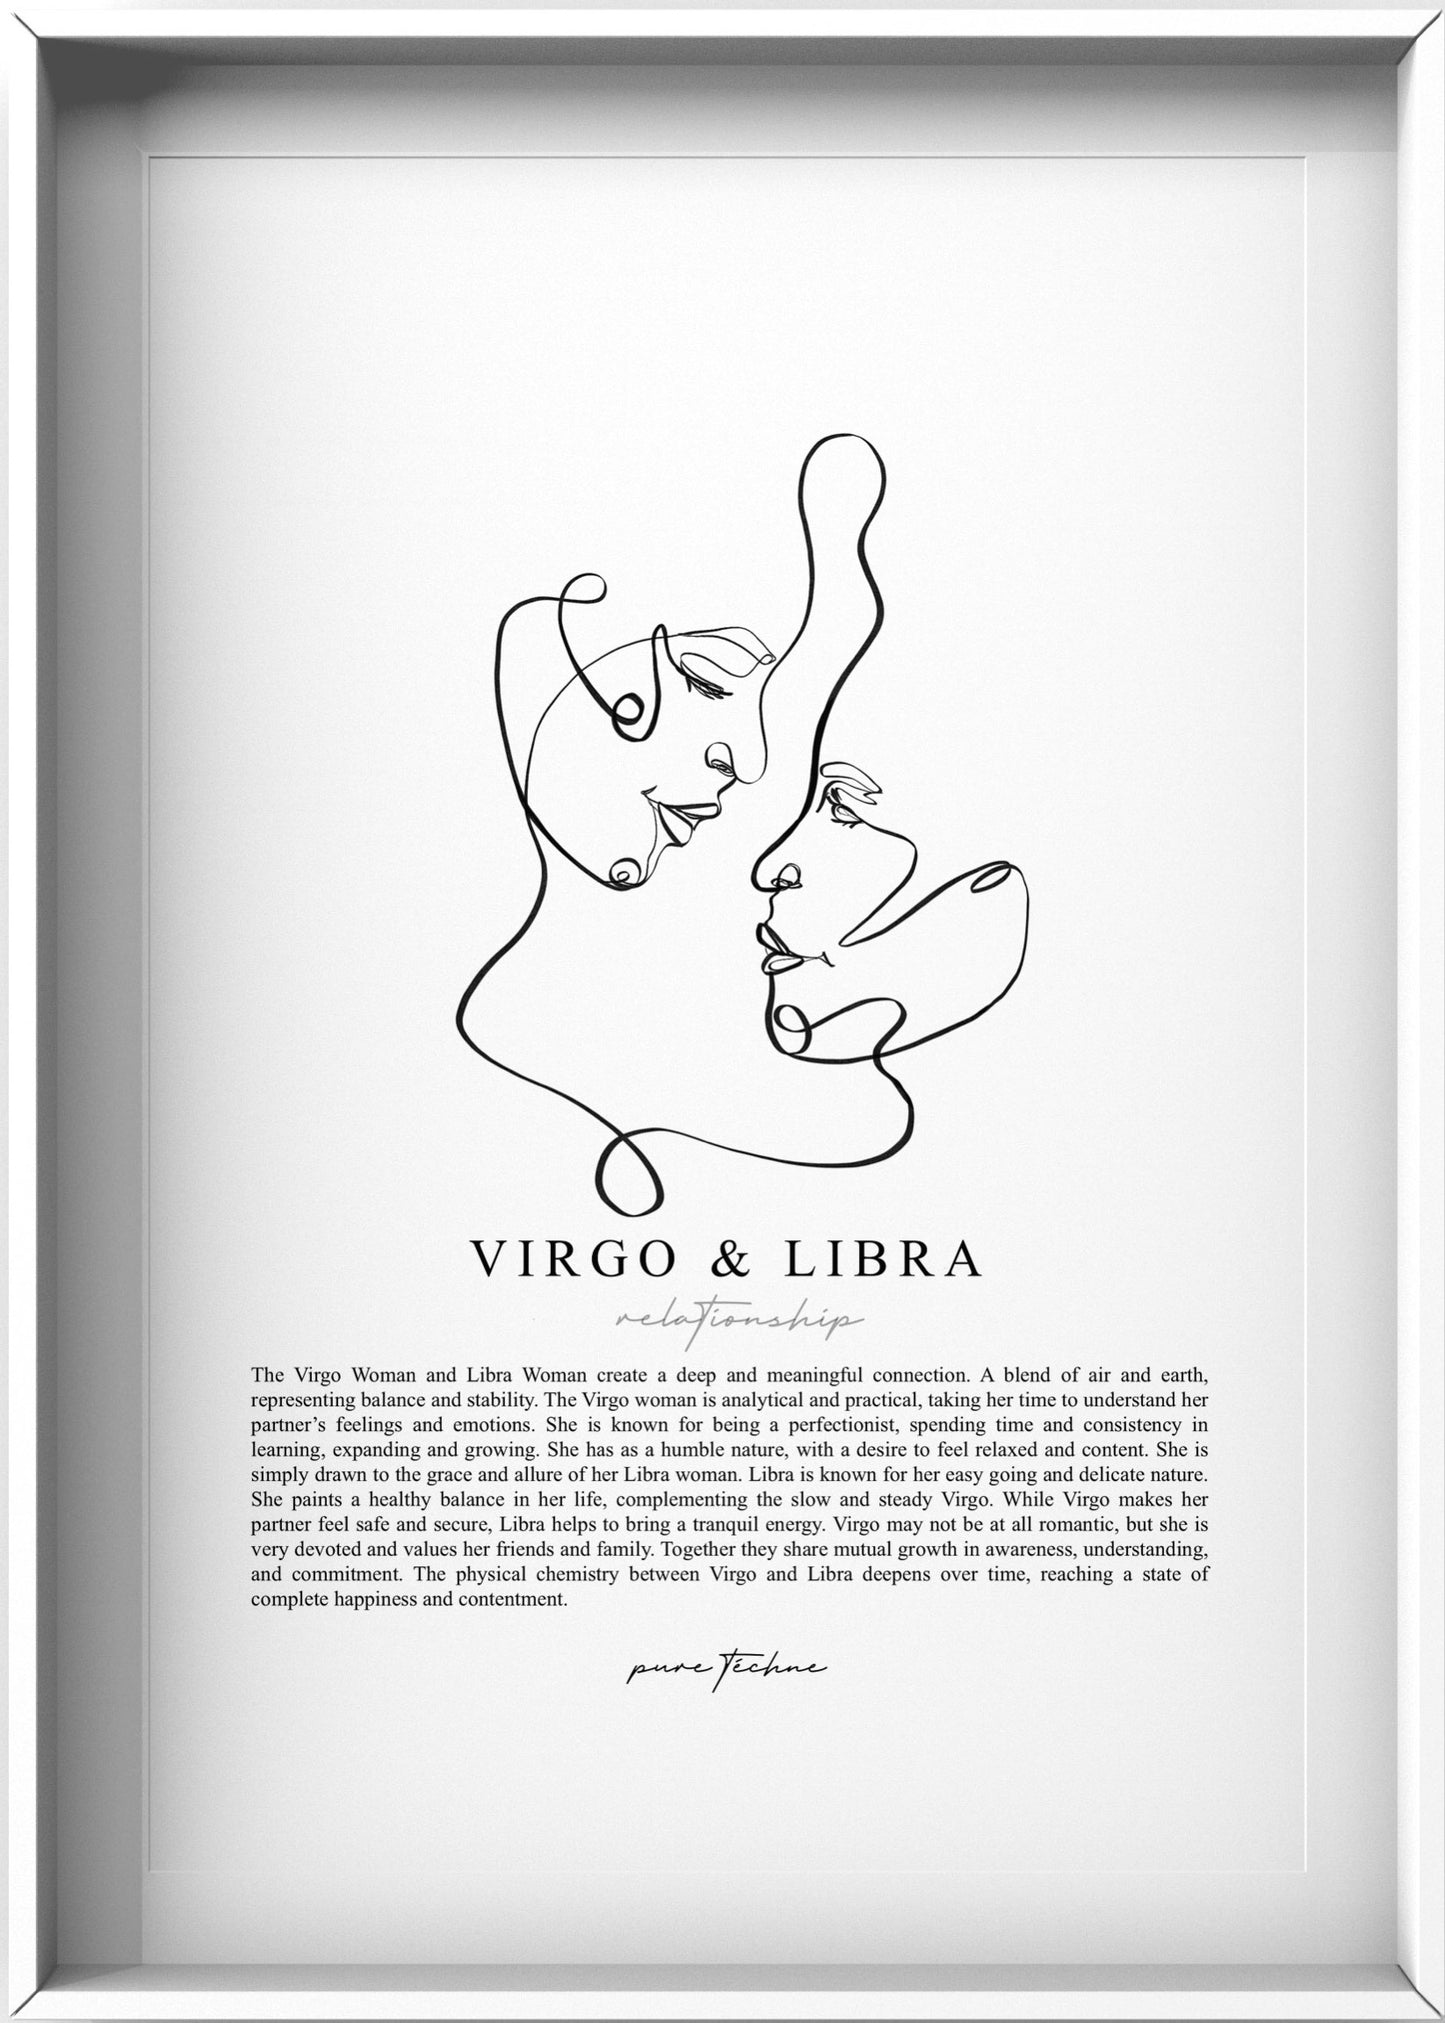 Virgo Woman & Libra Woman